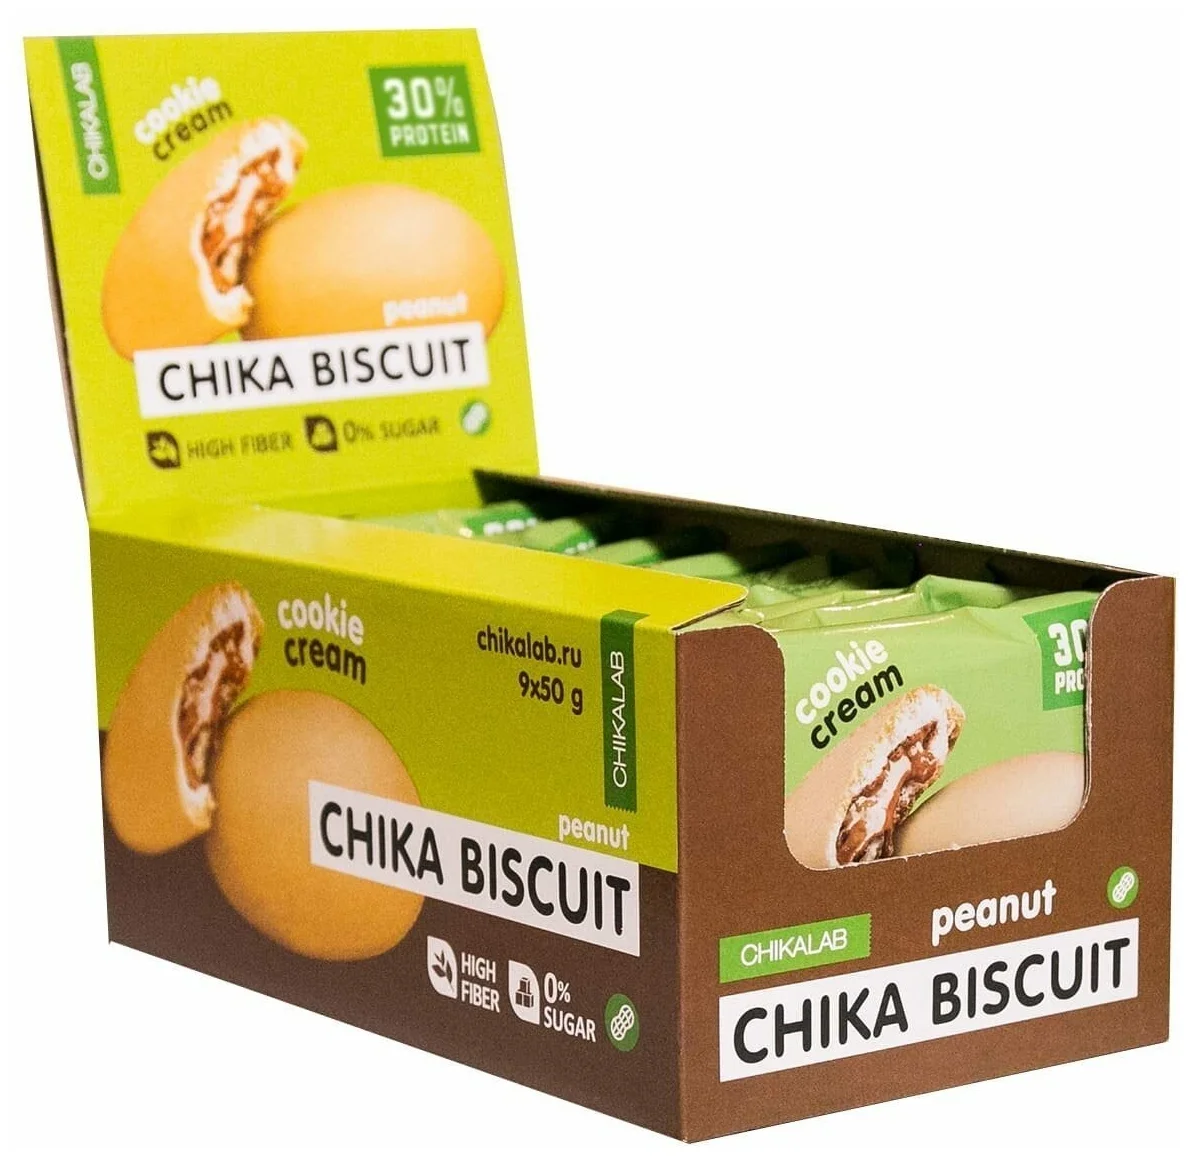 Chikalab Chika Biscuit, 50 г, 9 шт. - основные ингредиенты: протеин